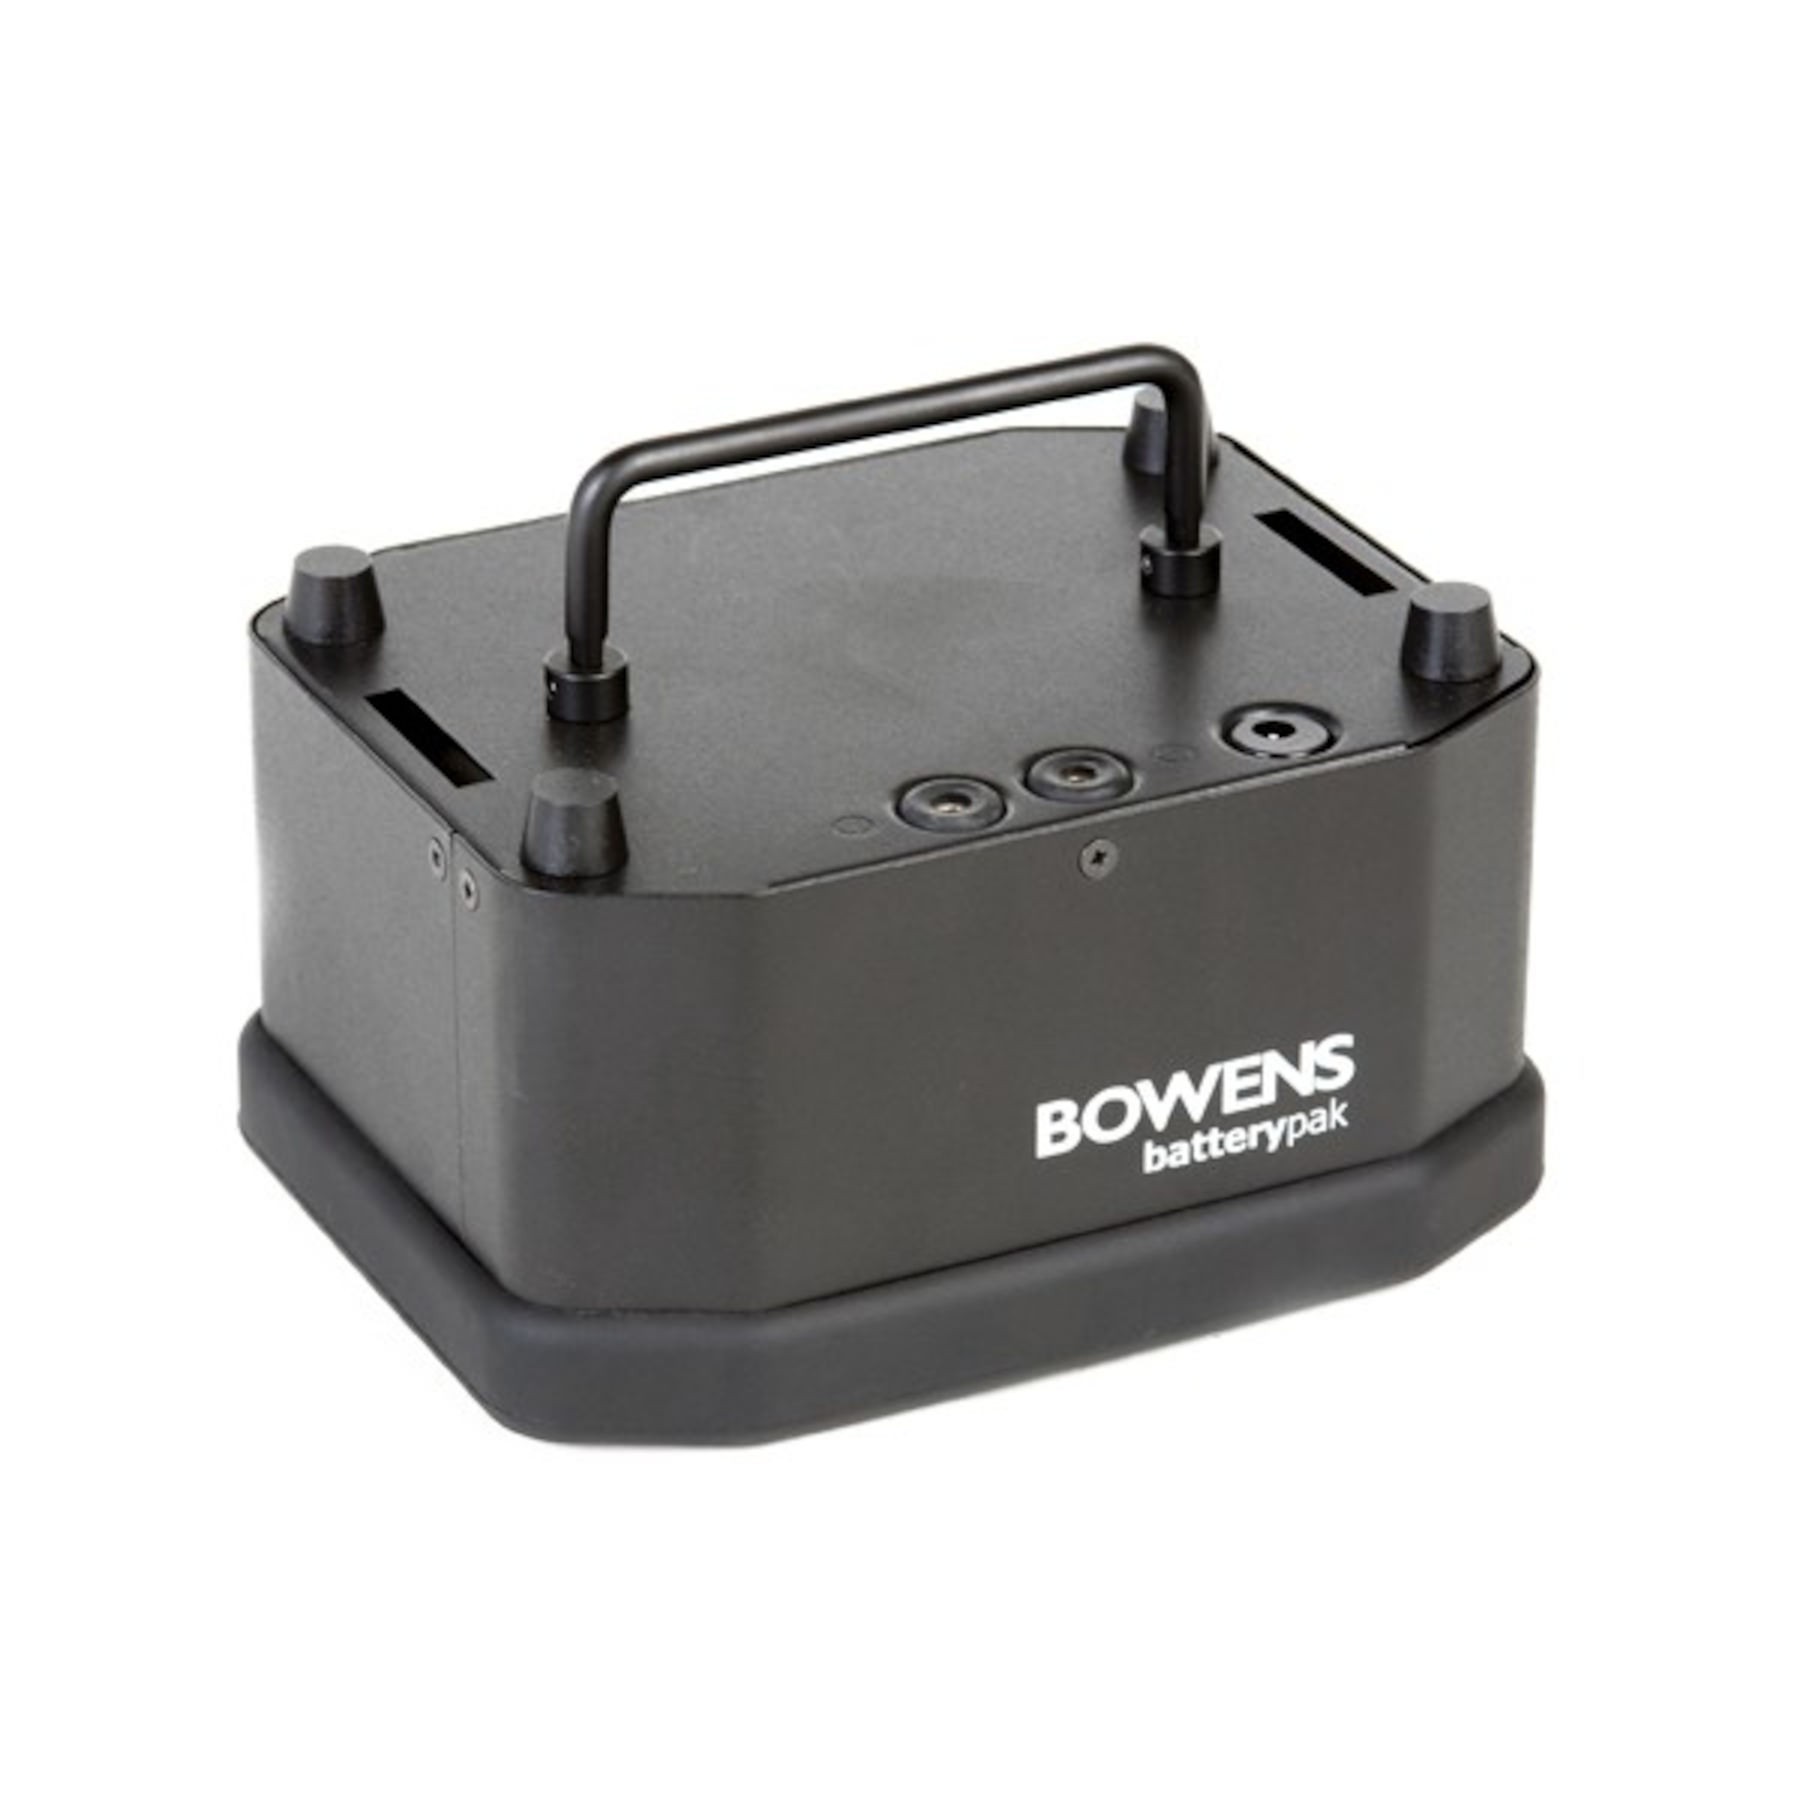 Bowens Small Battery Unit